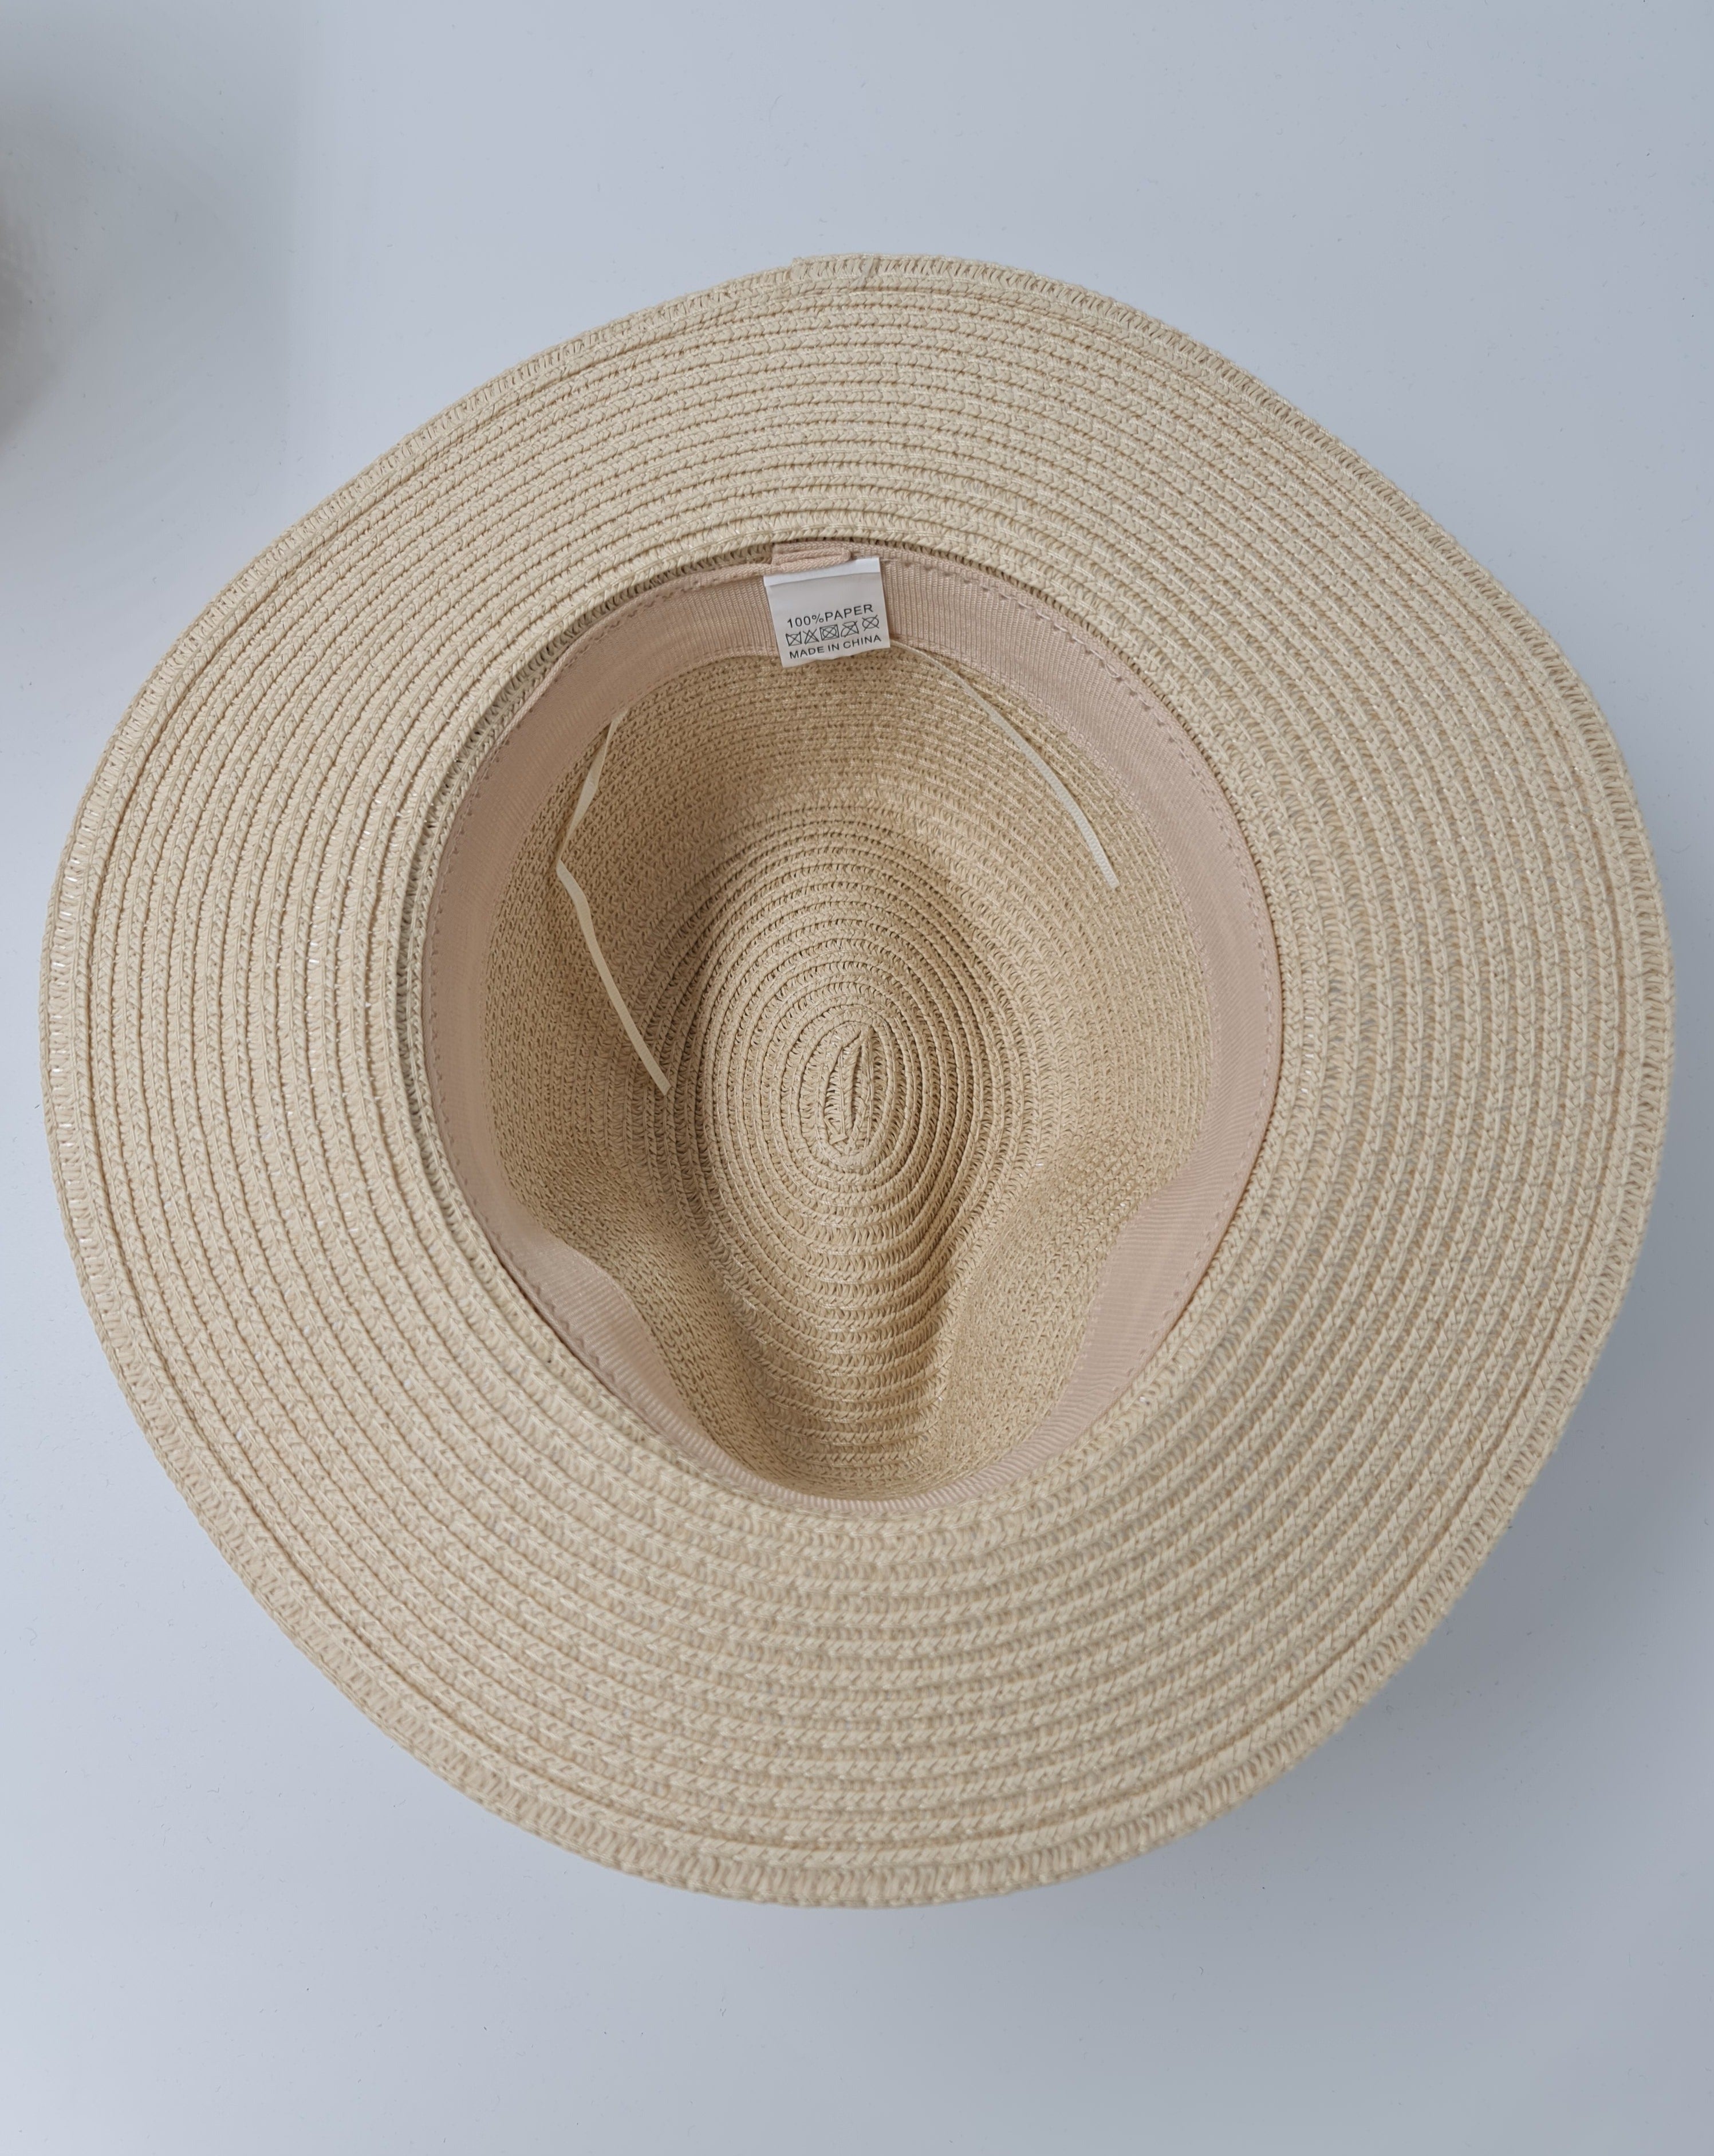 Free Spirit Classic Panama Summer Hat-Natural